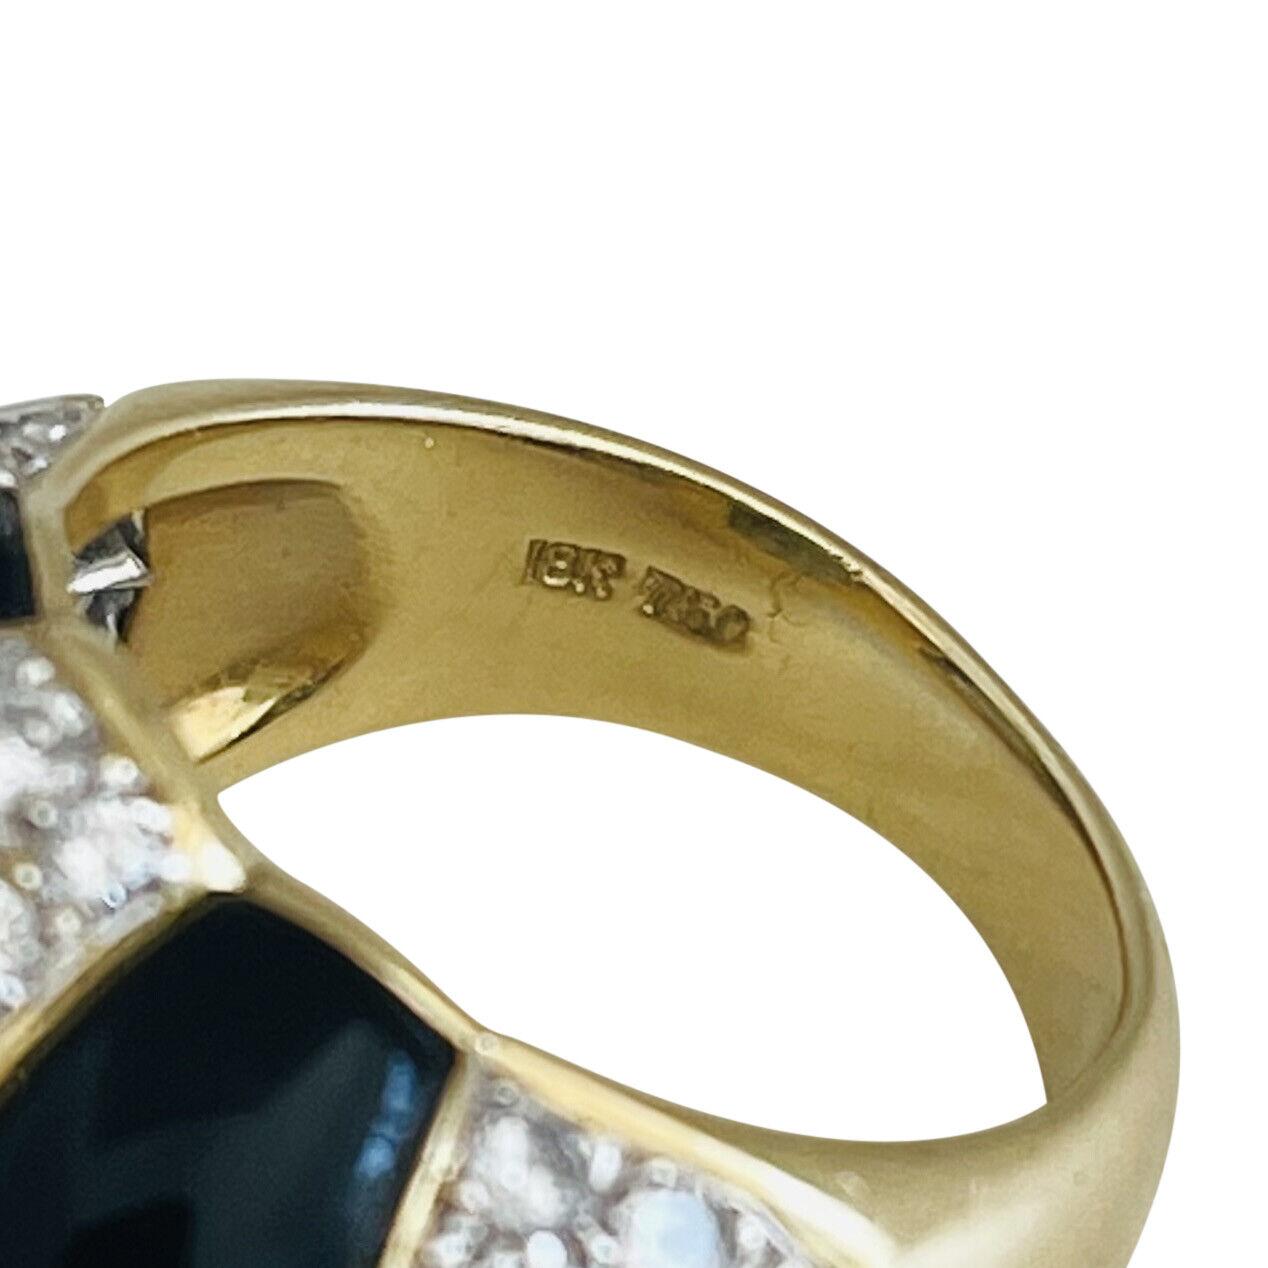 666 gold ring